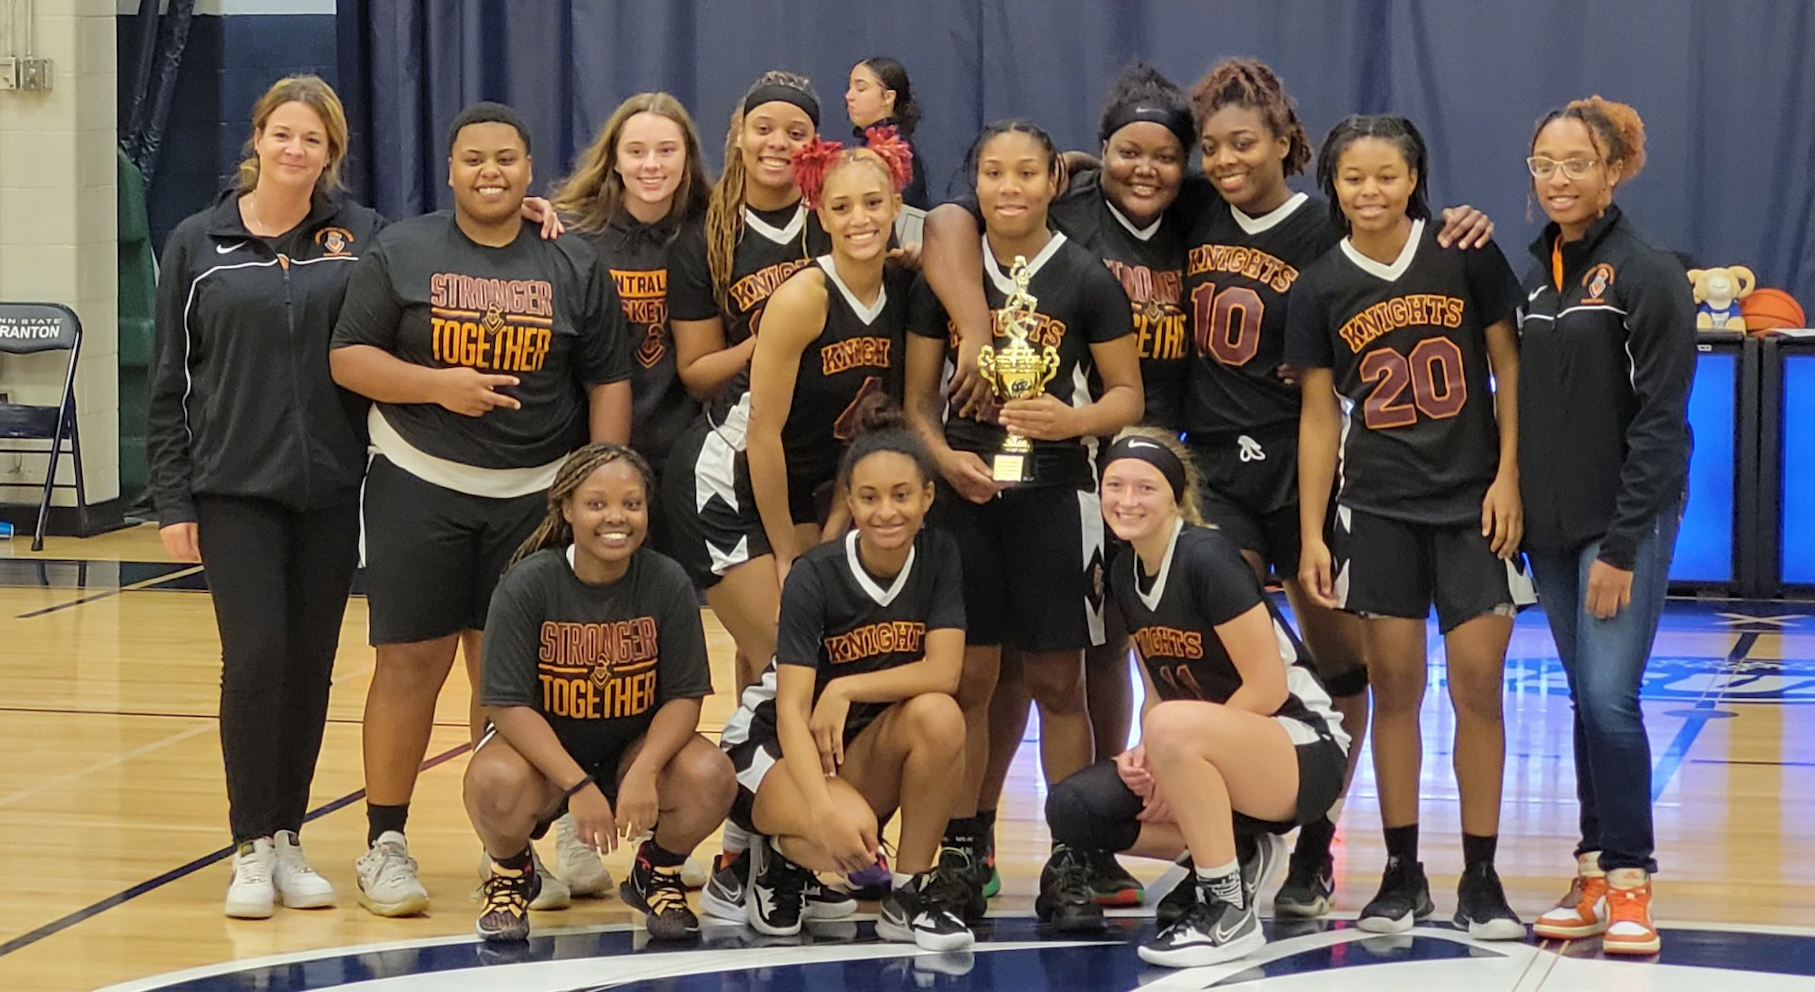 Central Penn College Women’s Basketball Team Wins Penn State-Scranton Tip-off Tournament